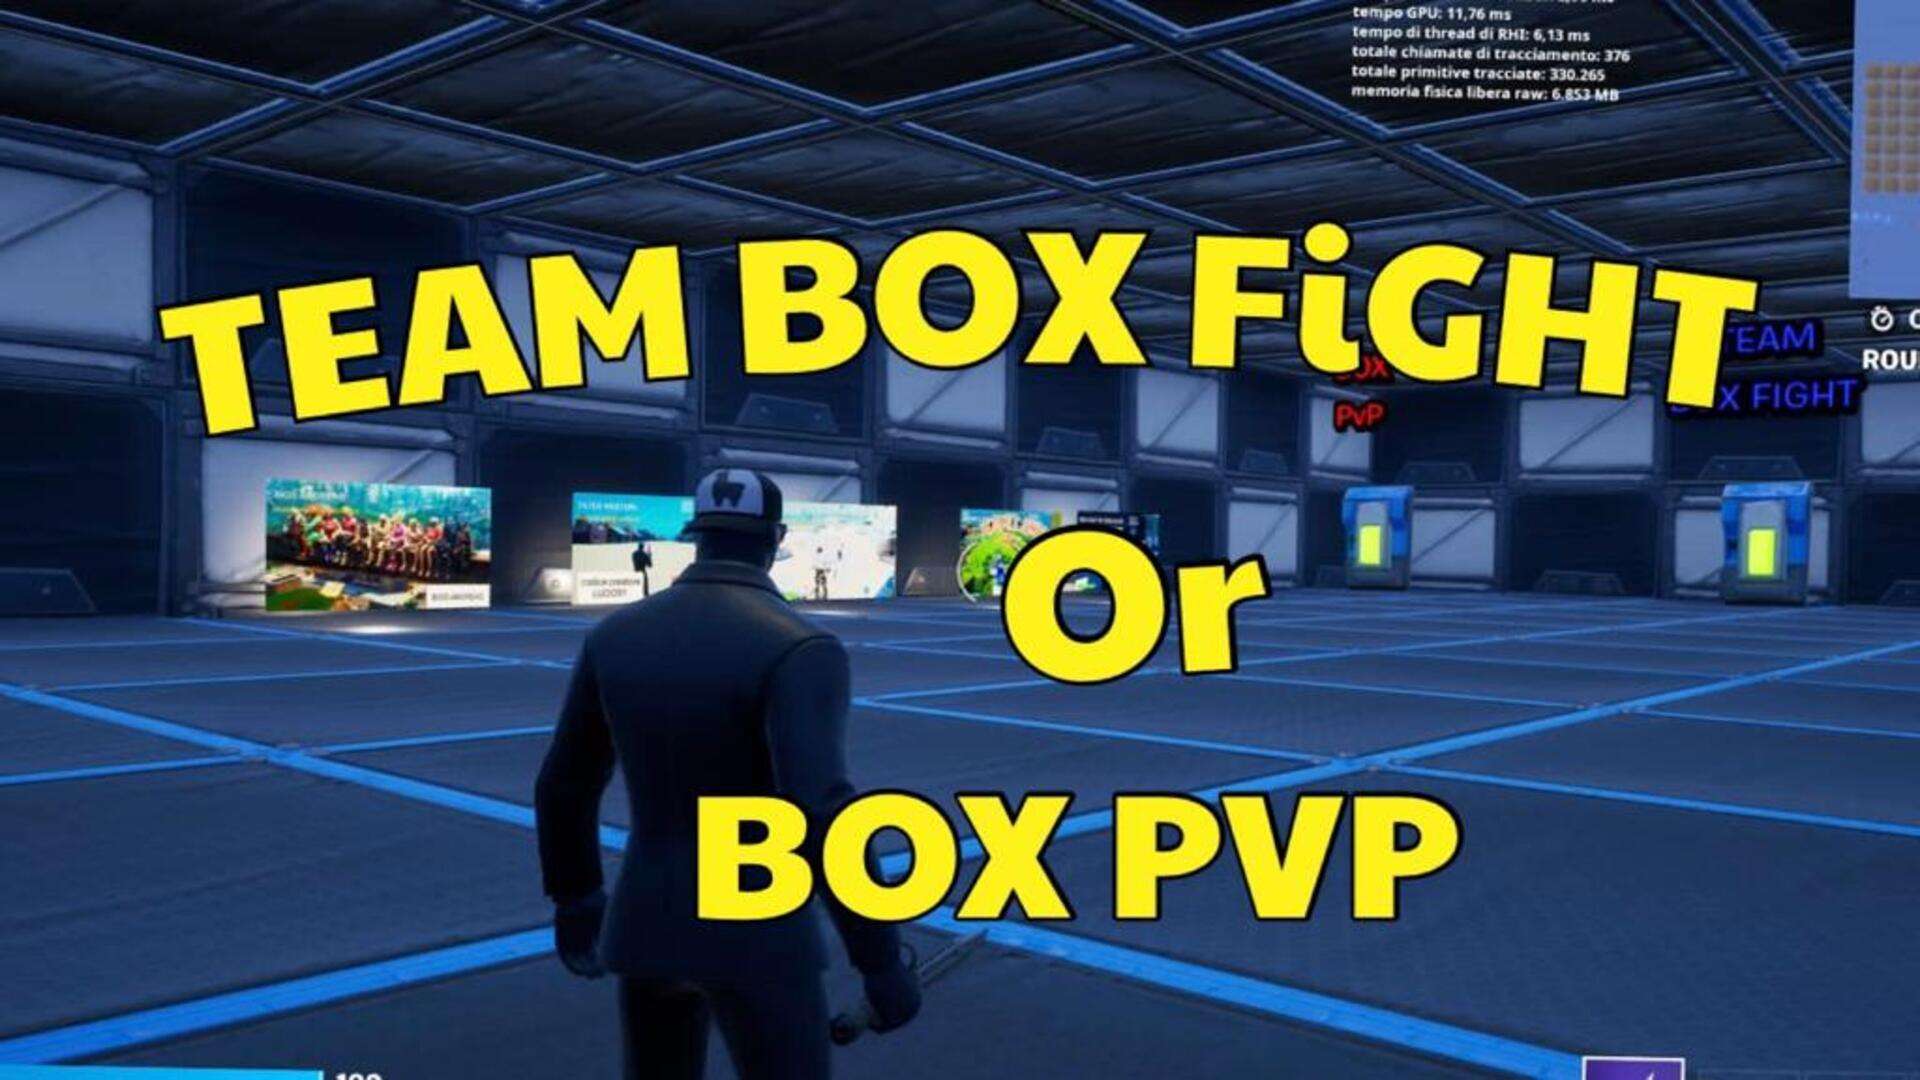 TEAM BOX FIGHT OR BOX PVP